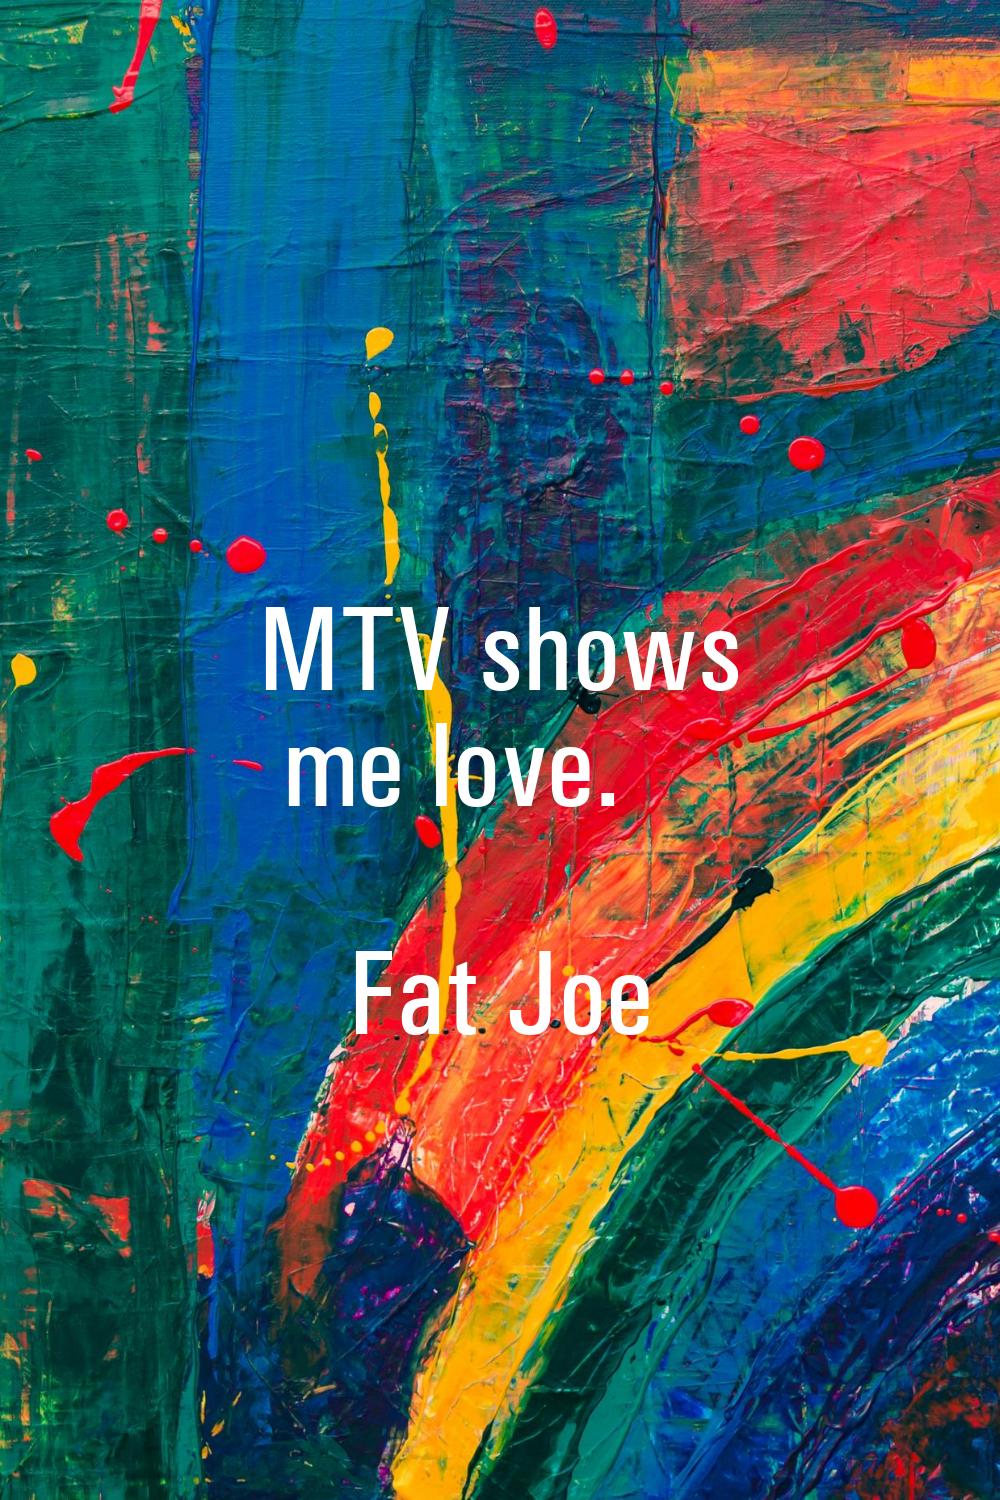 MTV shows me love.